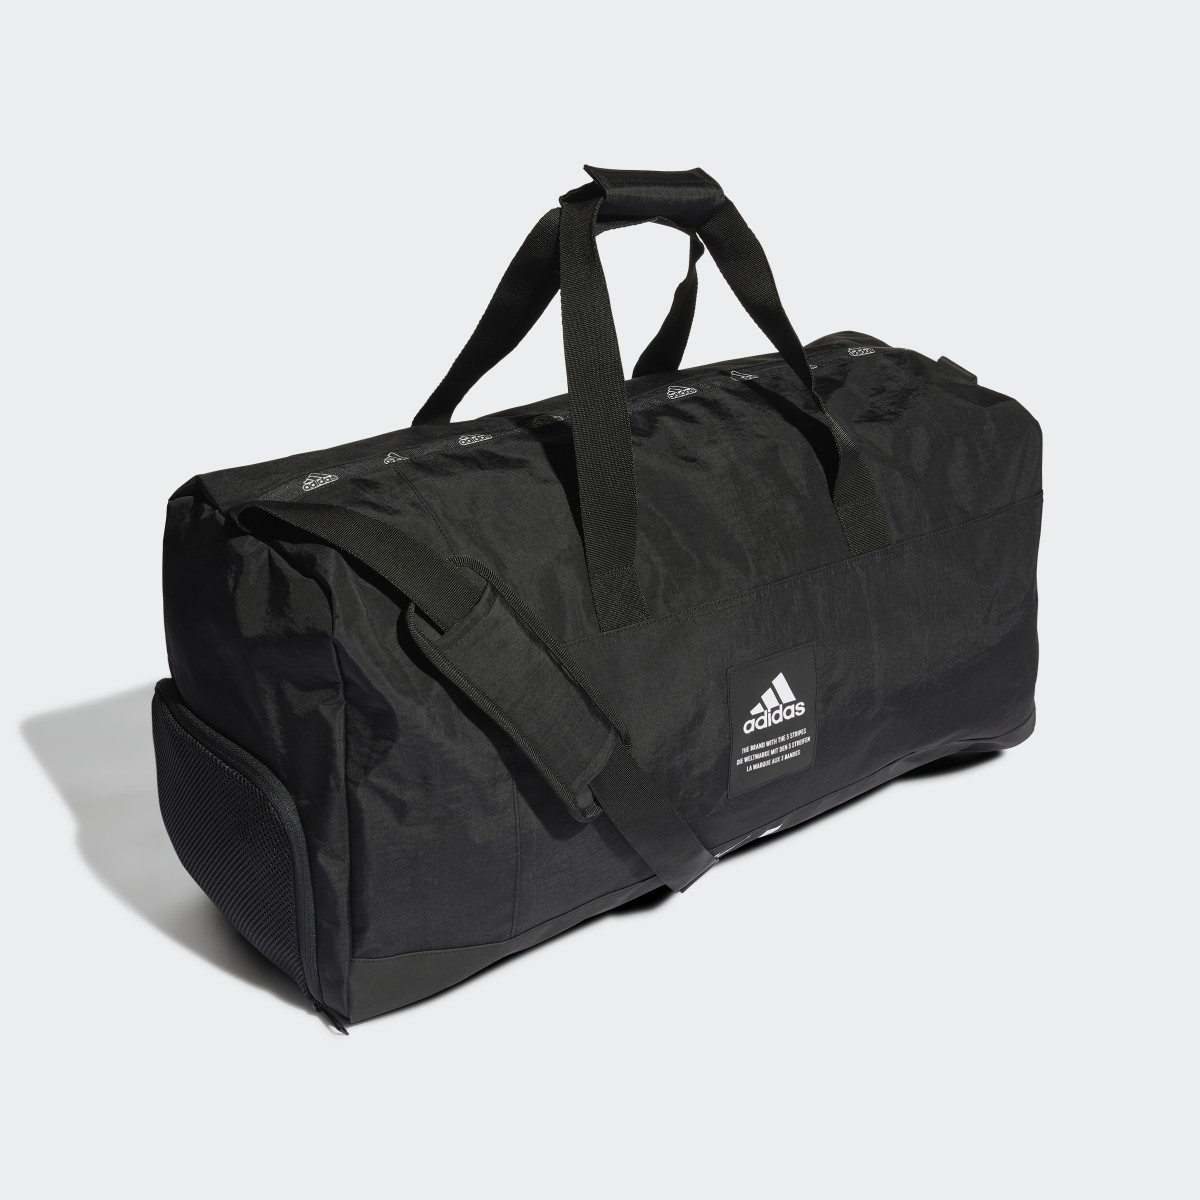 Adidas 4ATHLTS Duffel Bag Large. 4